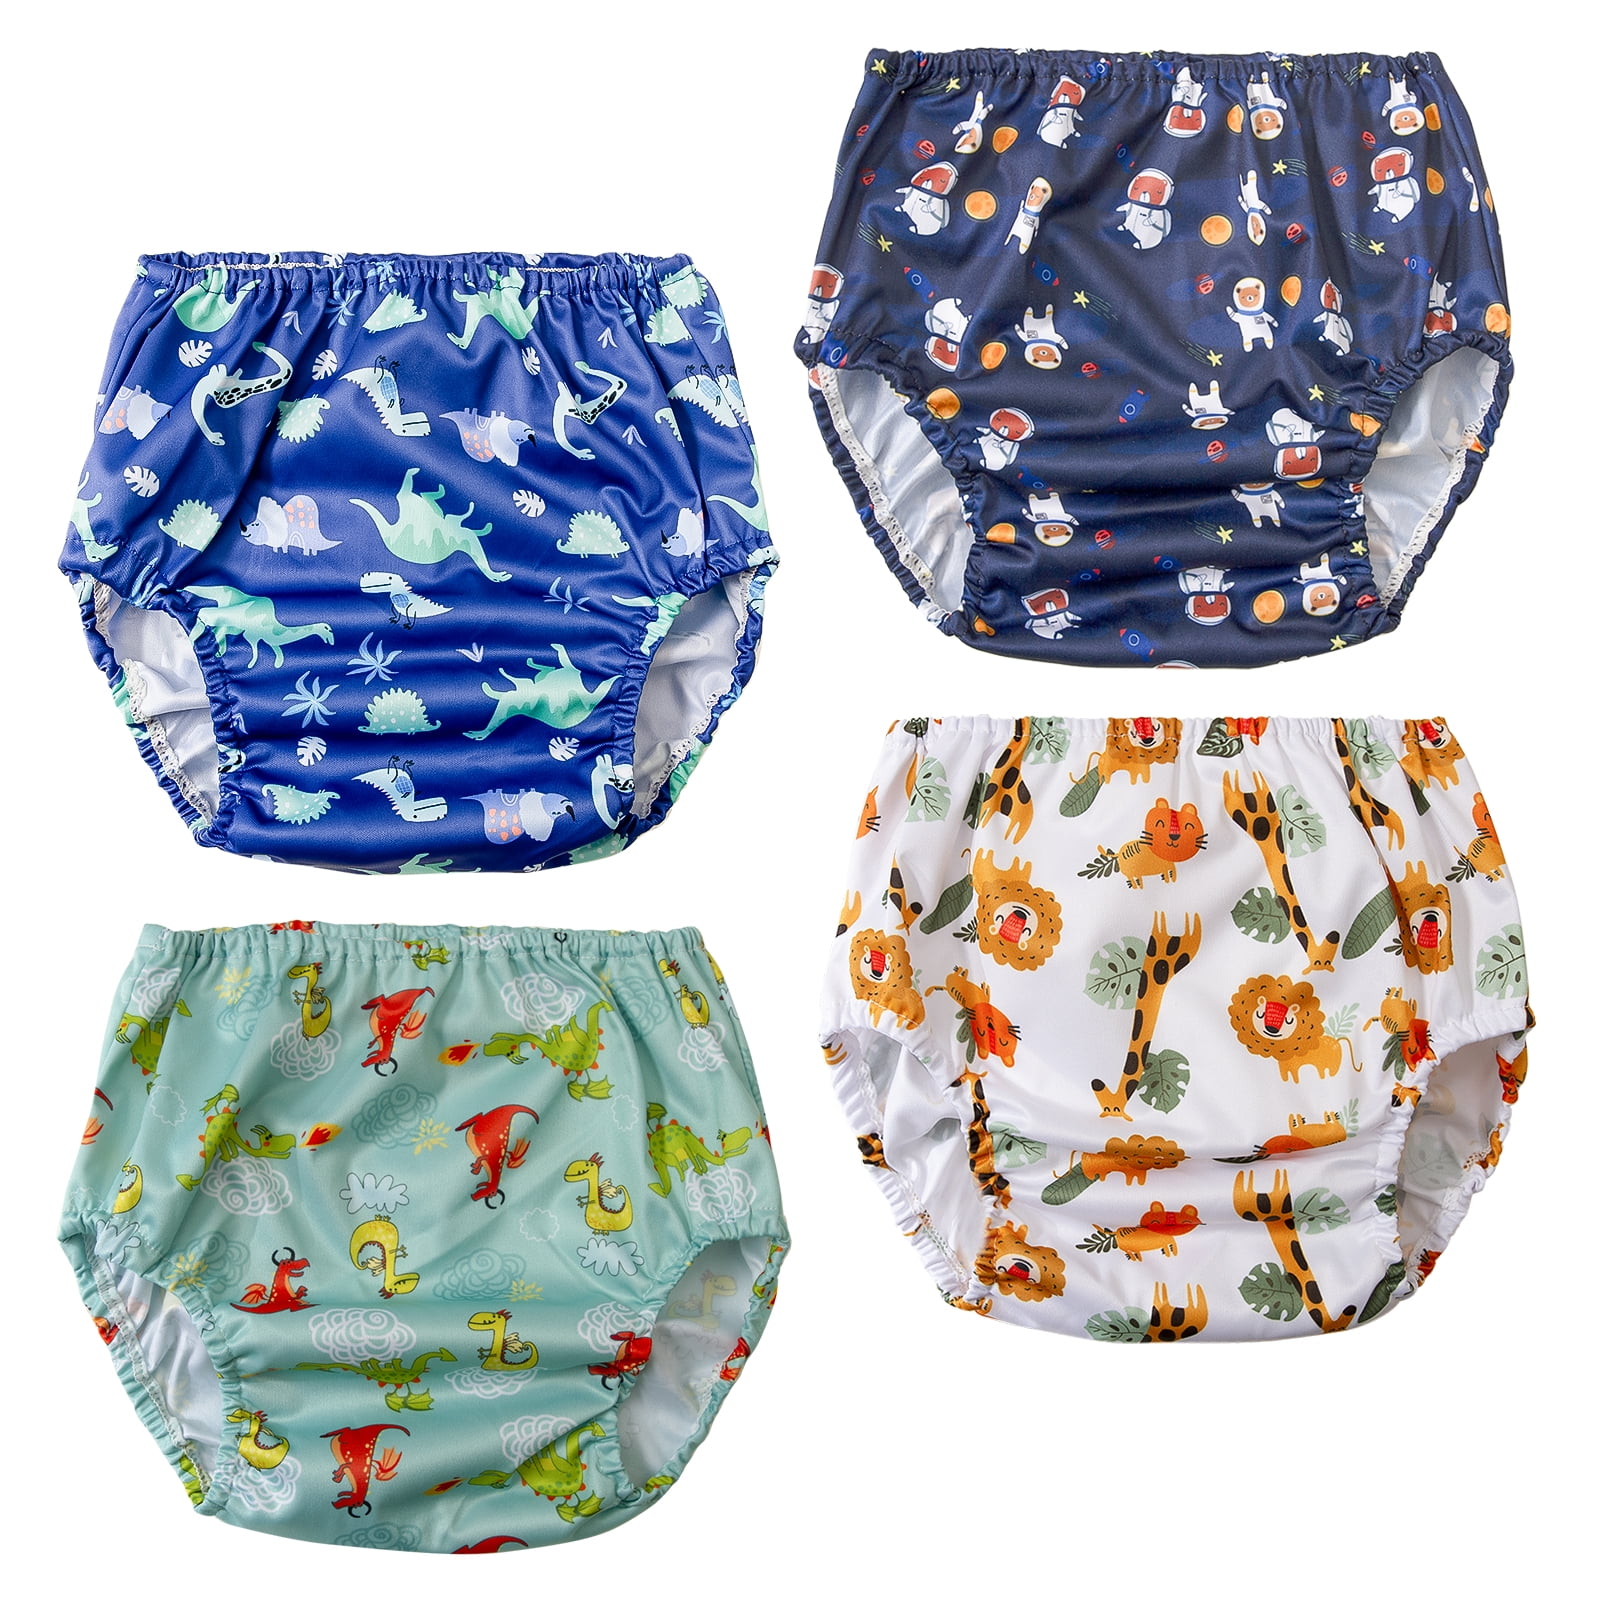 Diaper Covers for Girls Training Underwear for Girls 3T Rubber